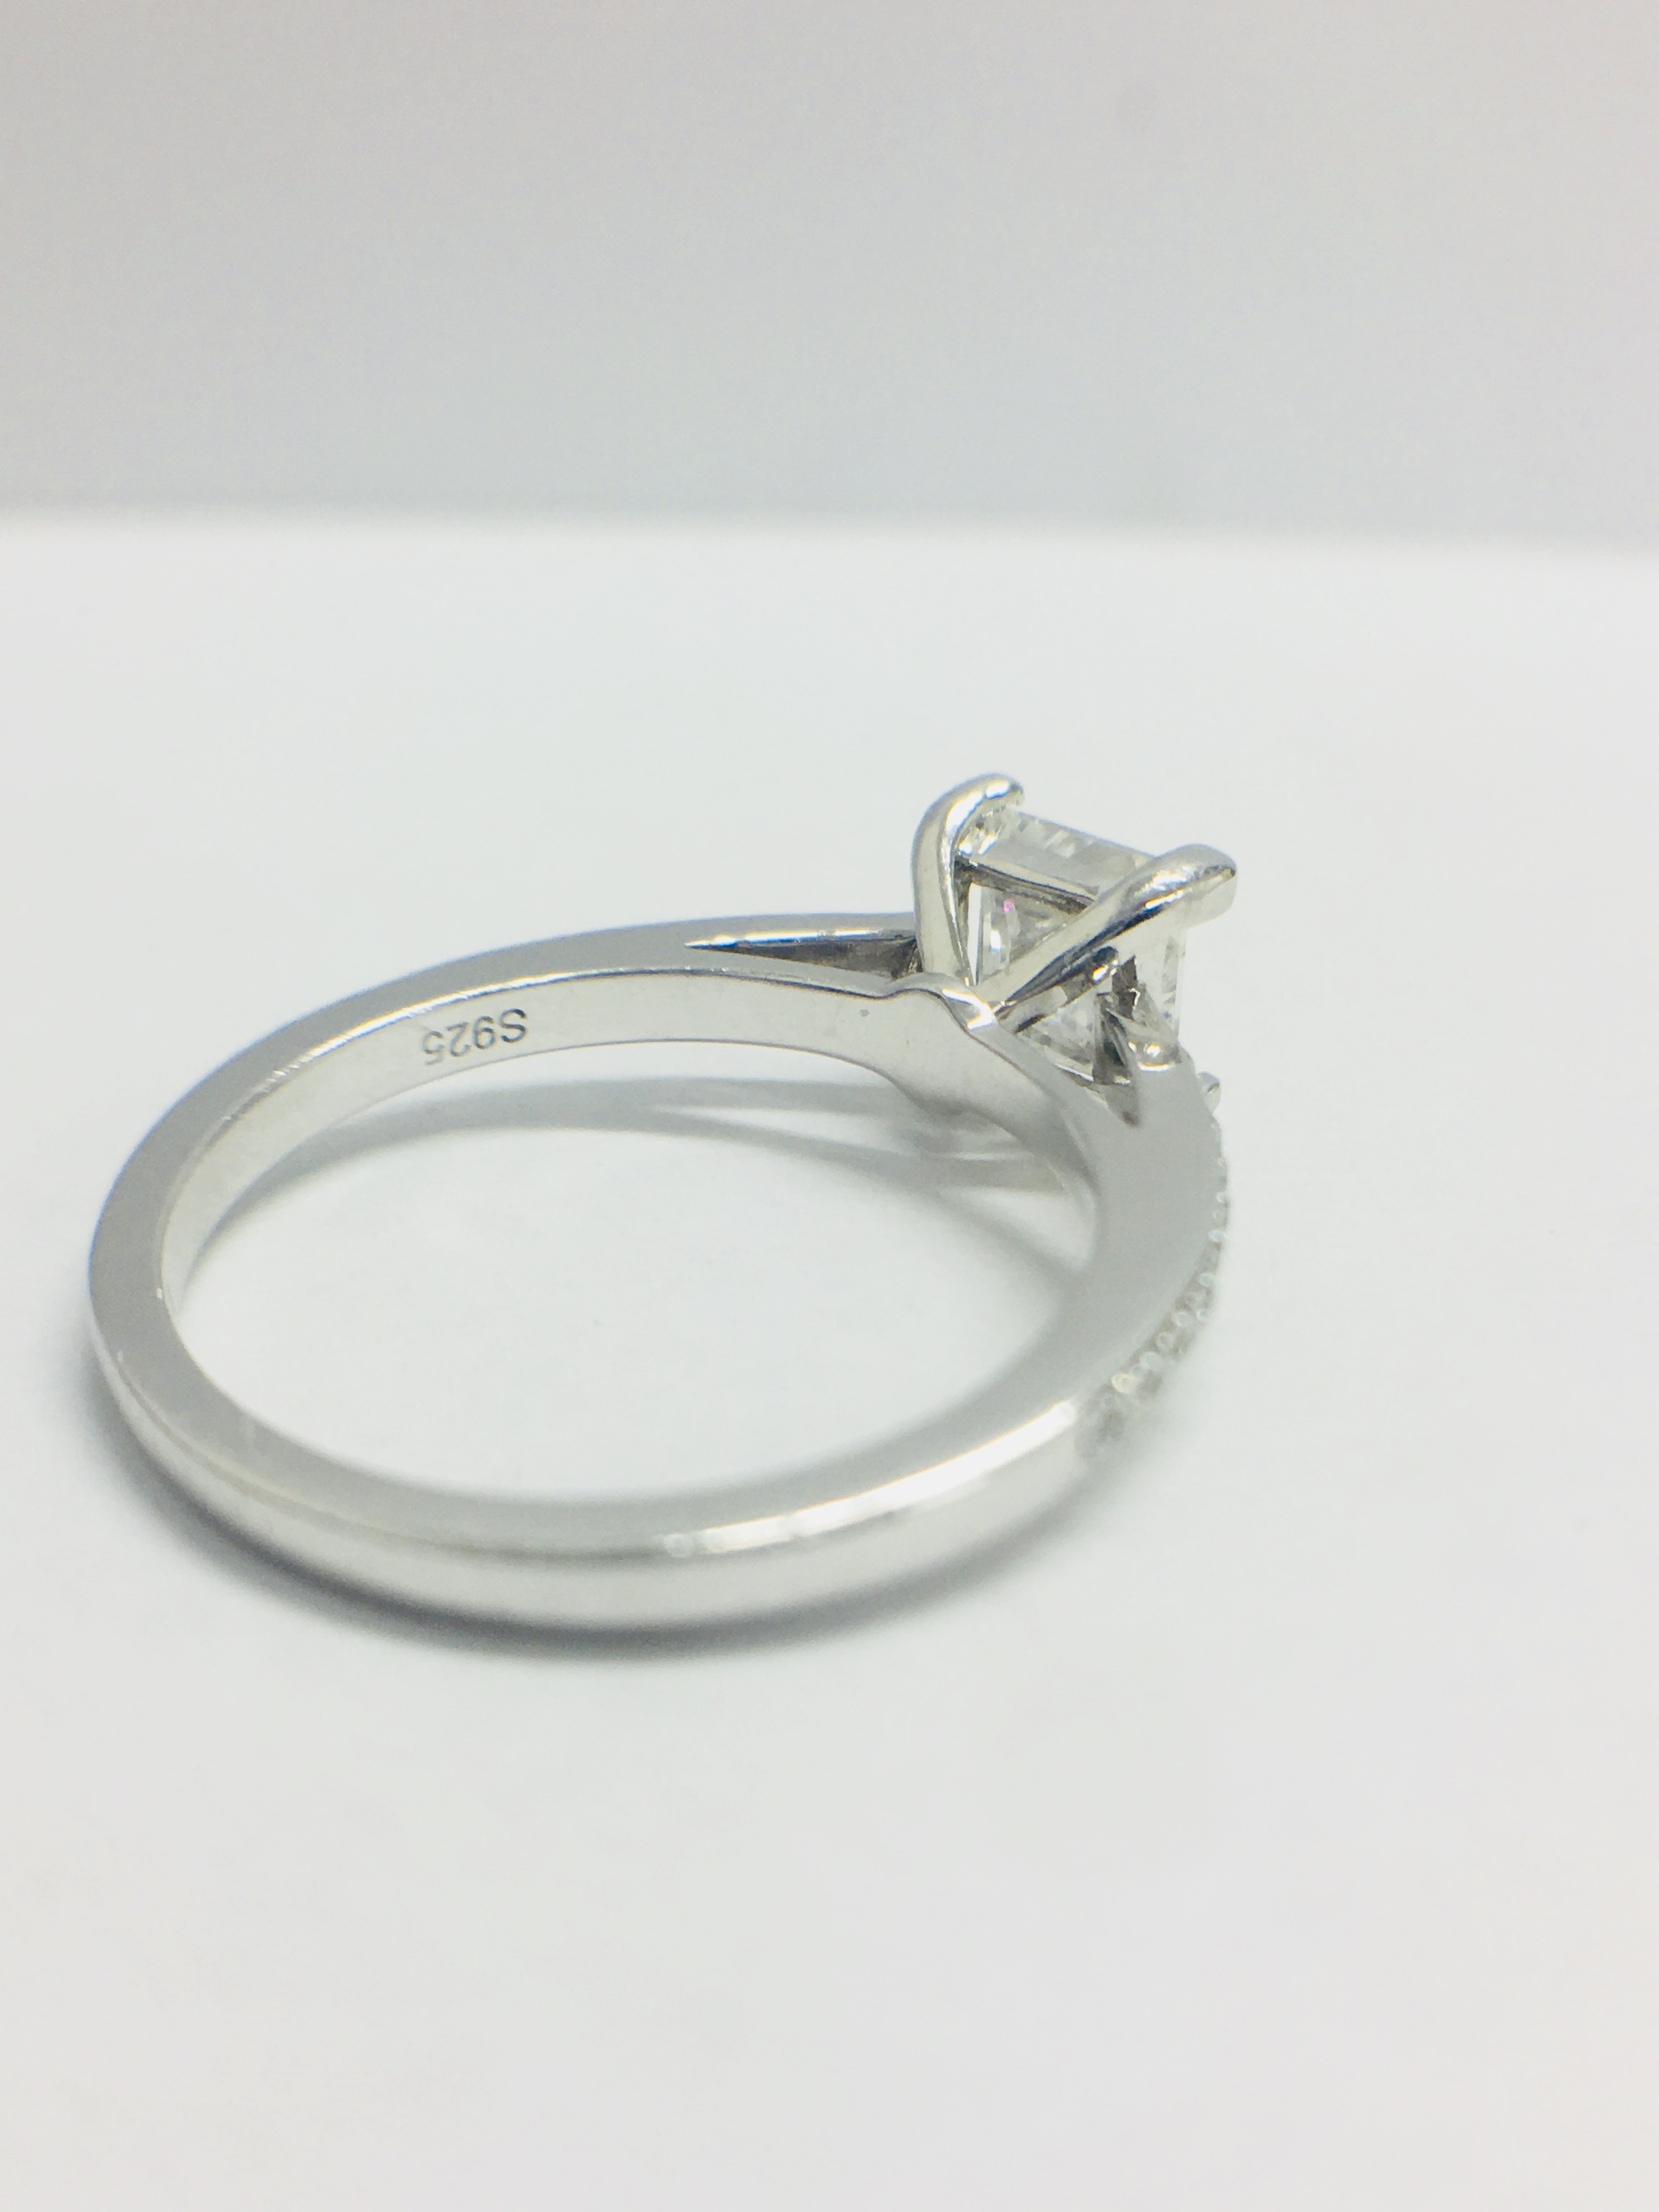 Platinum Diamond Solitaire Ring 1.10Ct Total Diamond Weight, - Image 9 of 12